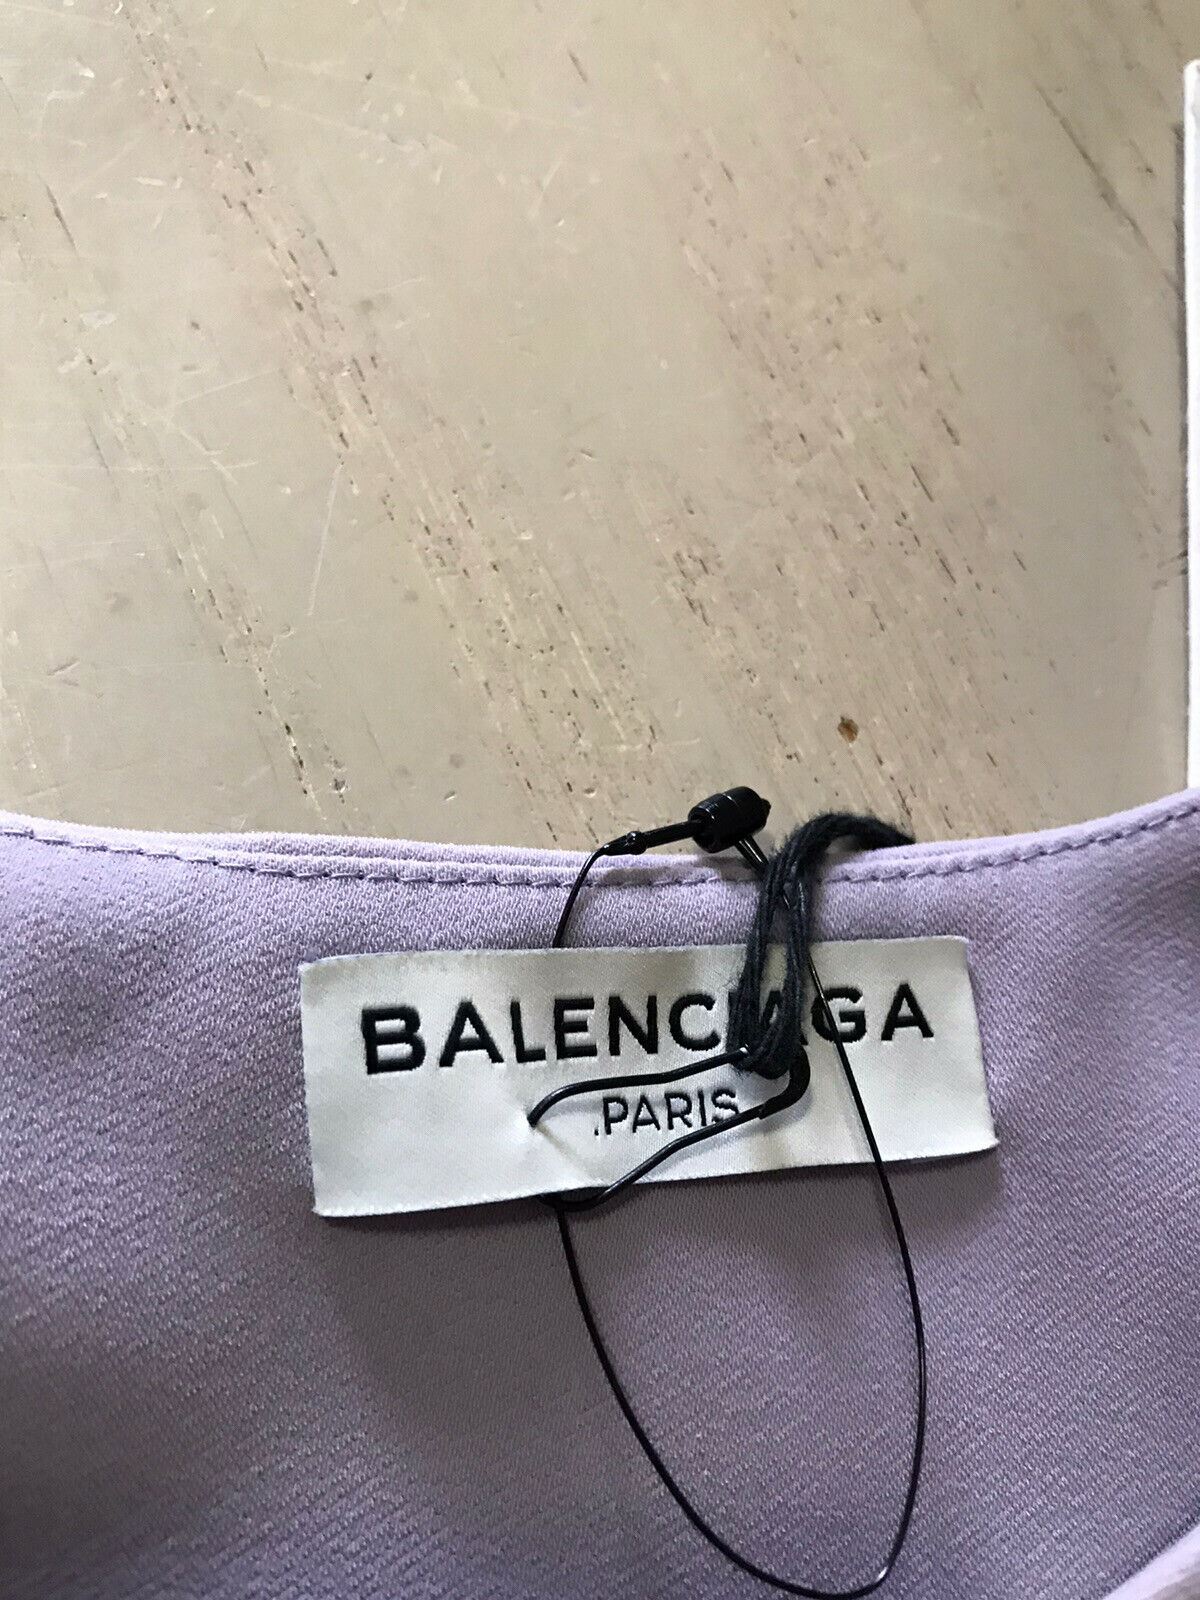 New $1235 Balenciaga Women’s Top Tank Blouse LT Purple Size 38 Italy